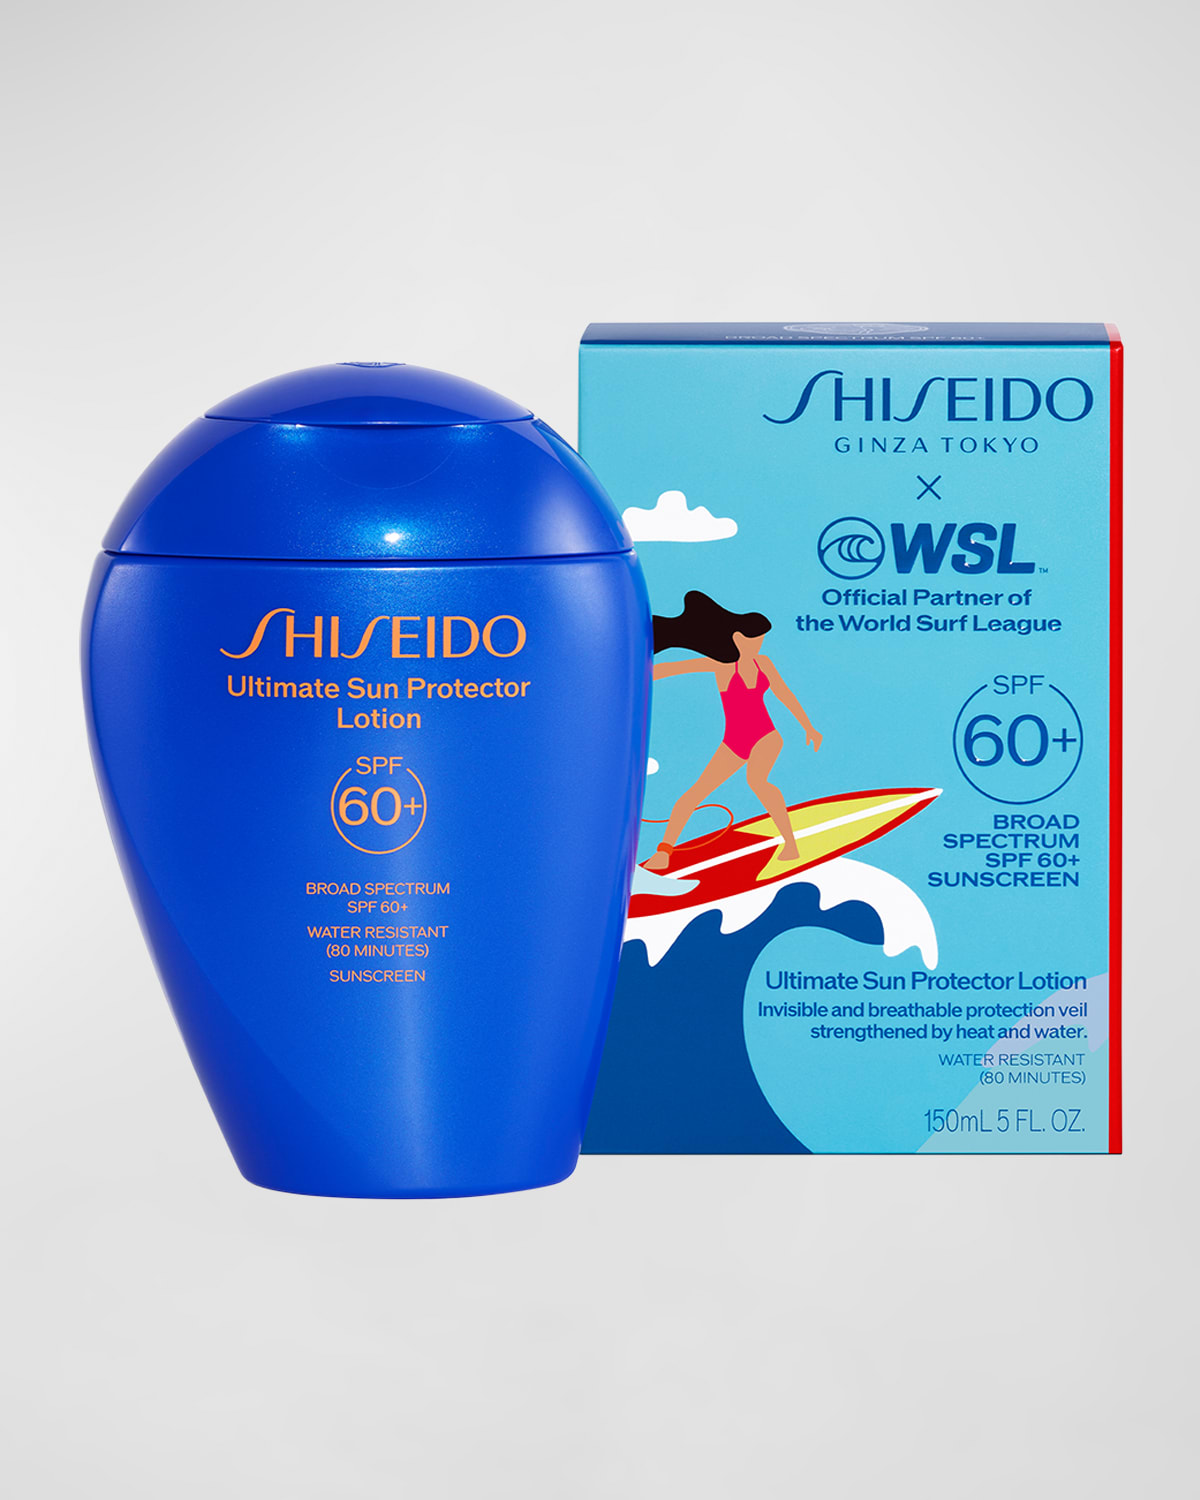 Shop Shiseido Limited-edition World Surf League Ultimate Sun Protector Lotion Spf 60+, 5 Oz.